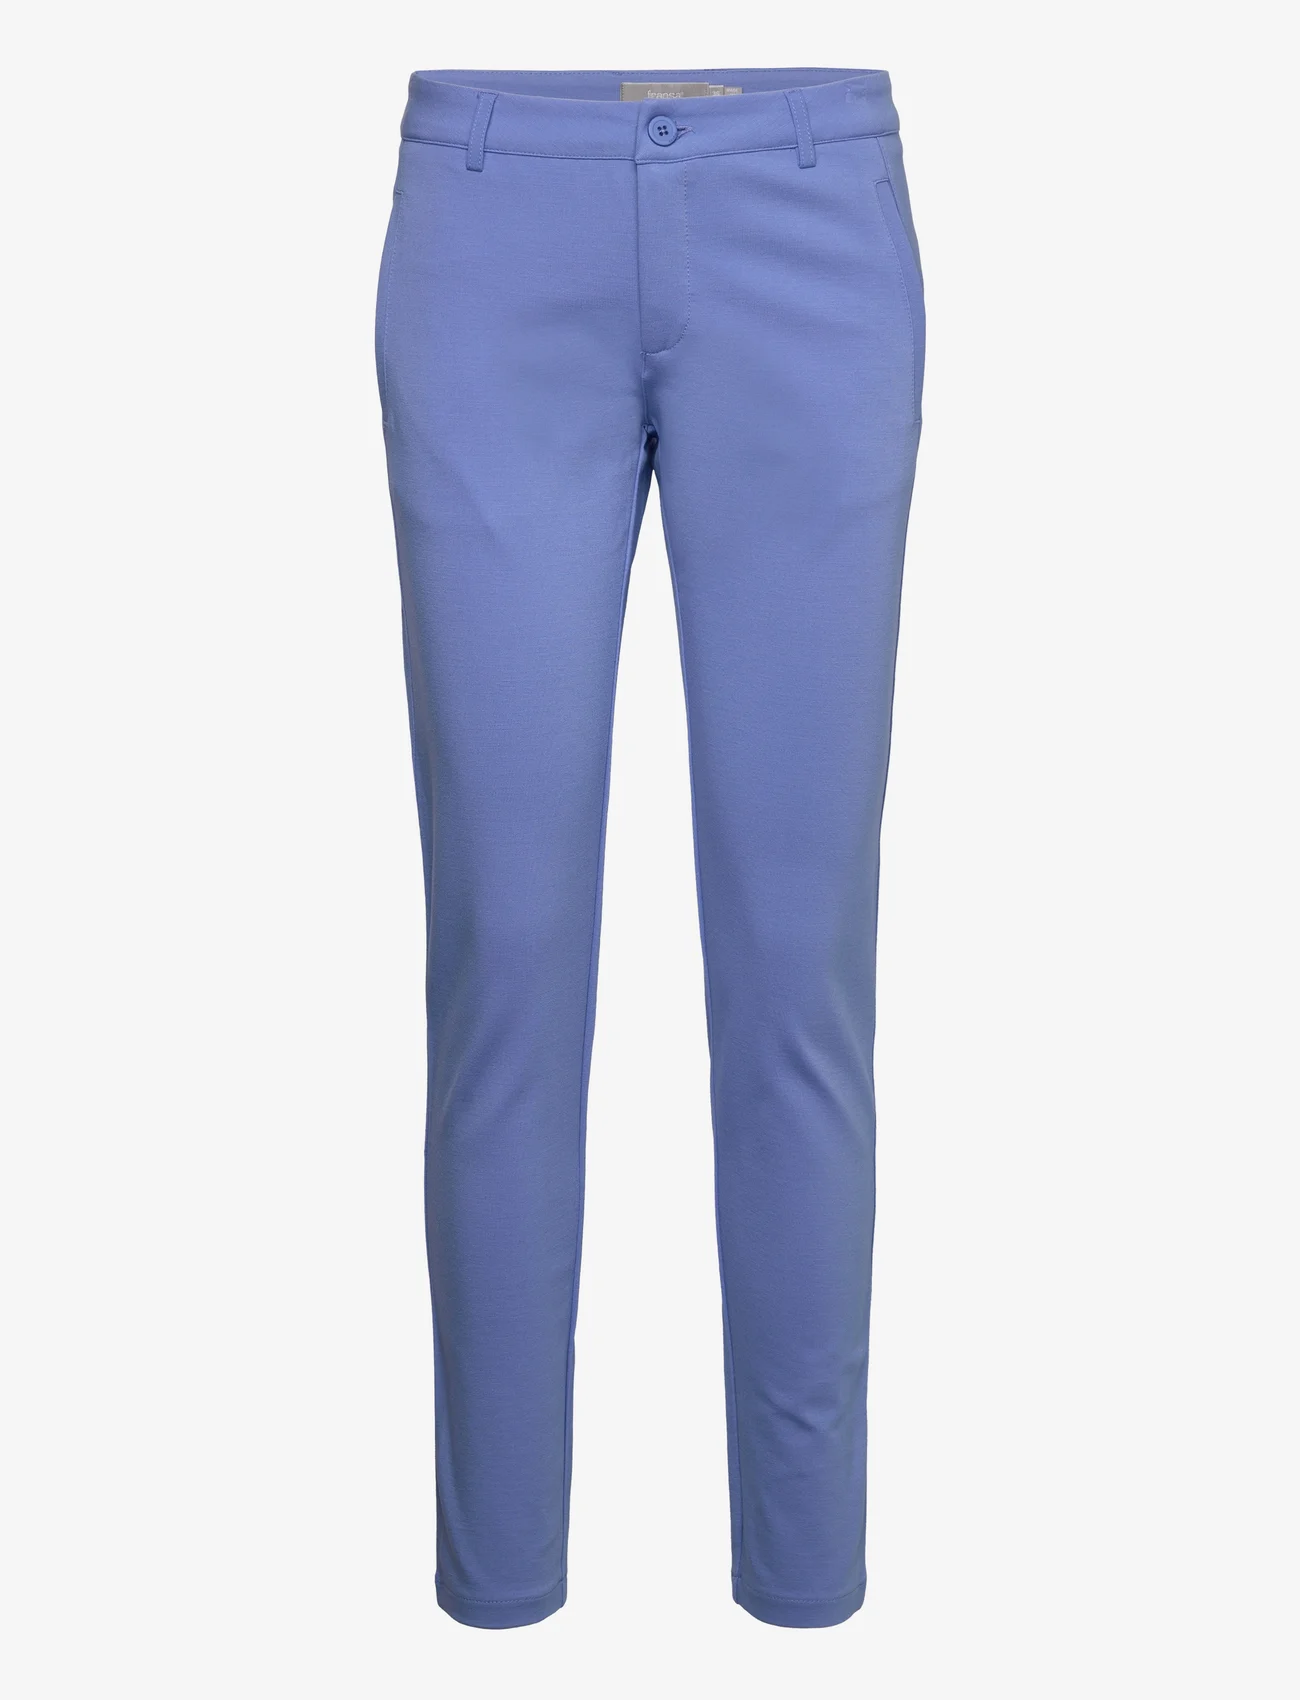 Fransa - FRLANO TESSA PA 1 - slim fit trousers - ultramarine - 0